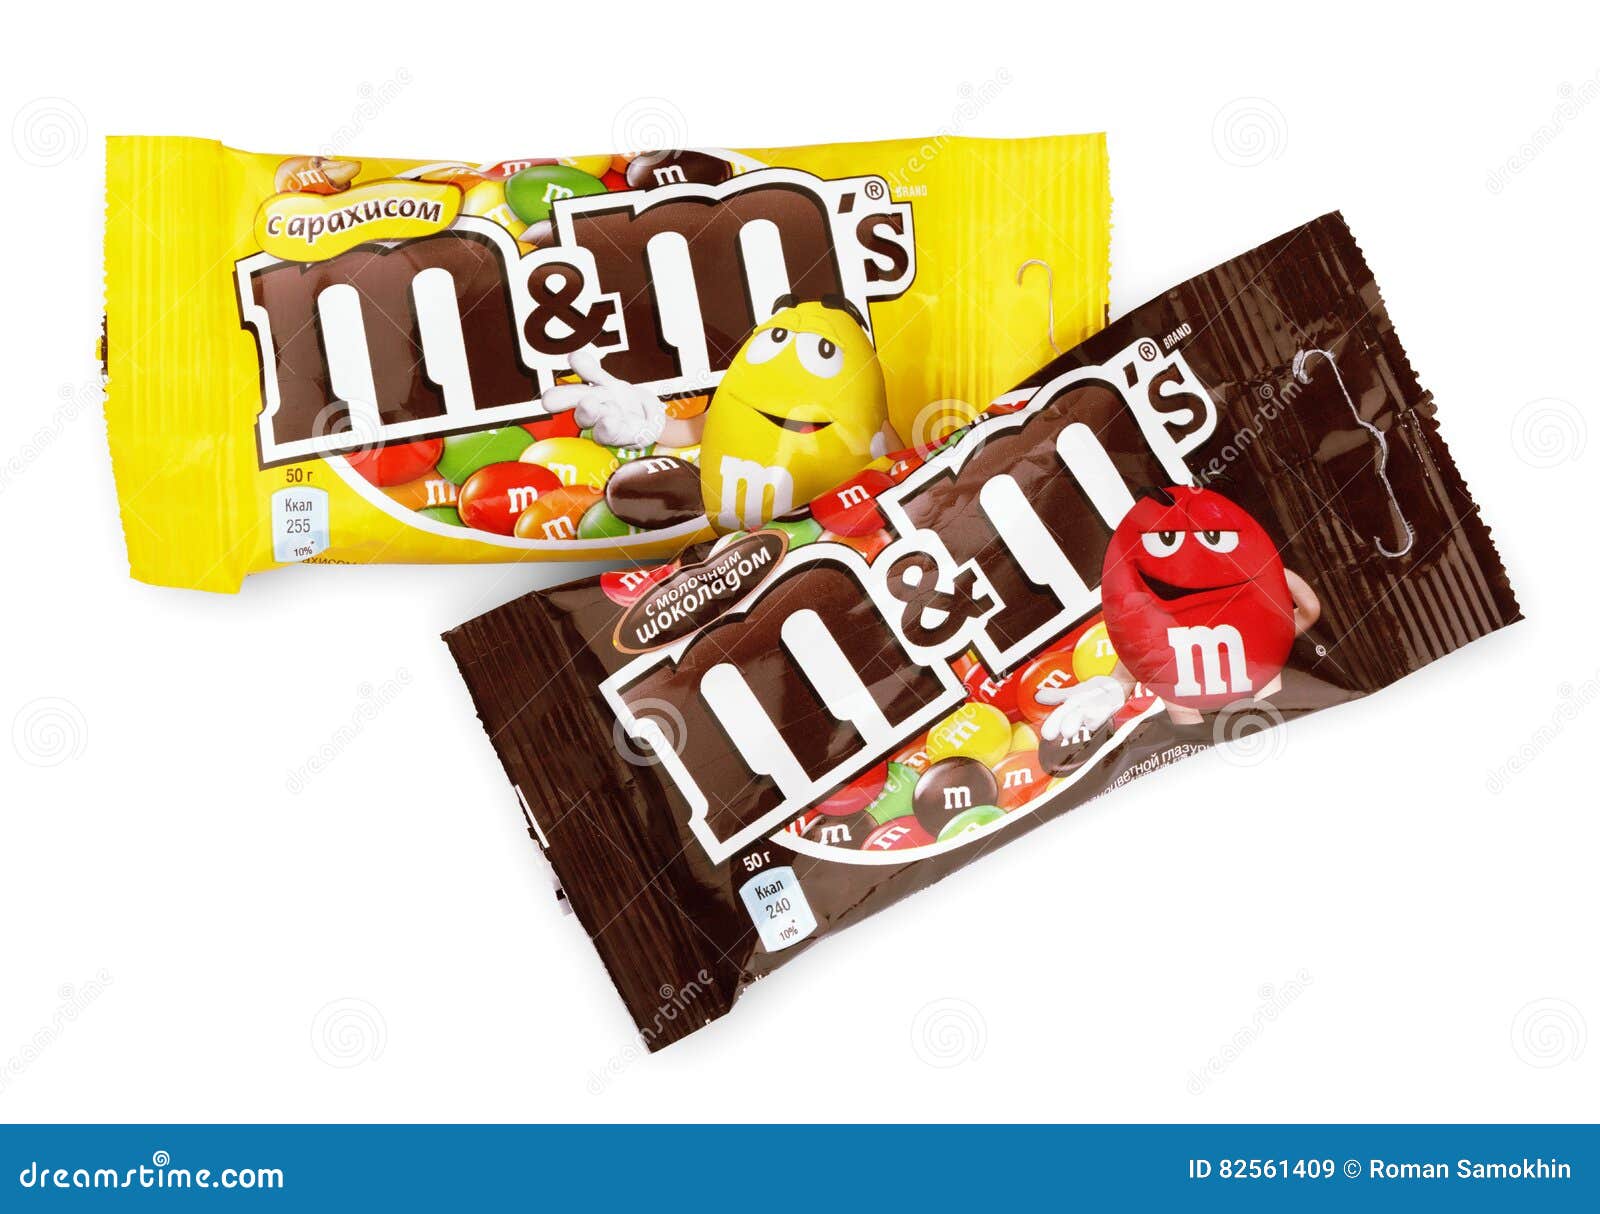 M&M’s PEANUT CHOCOLATE BAR